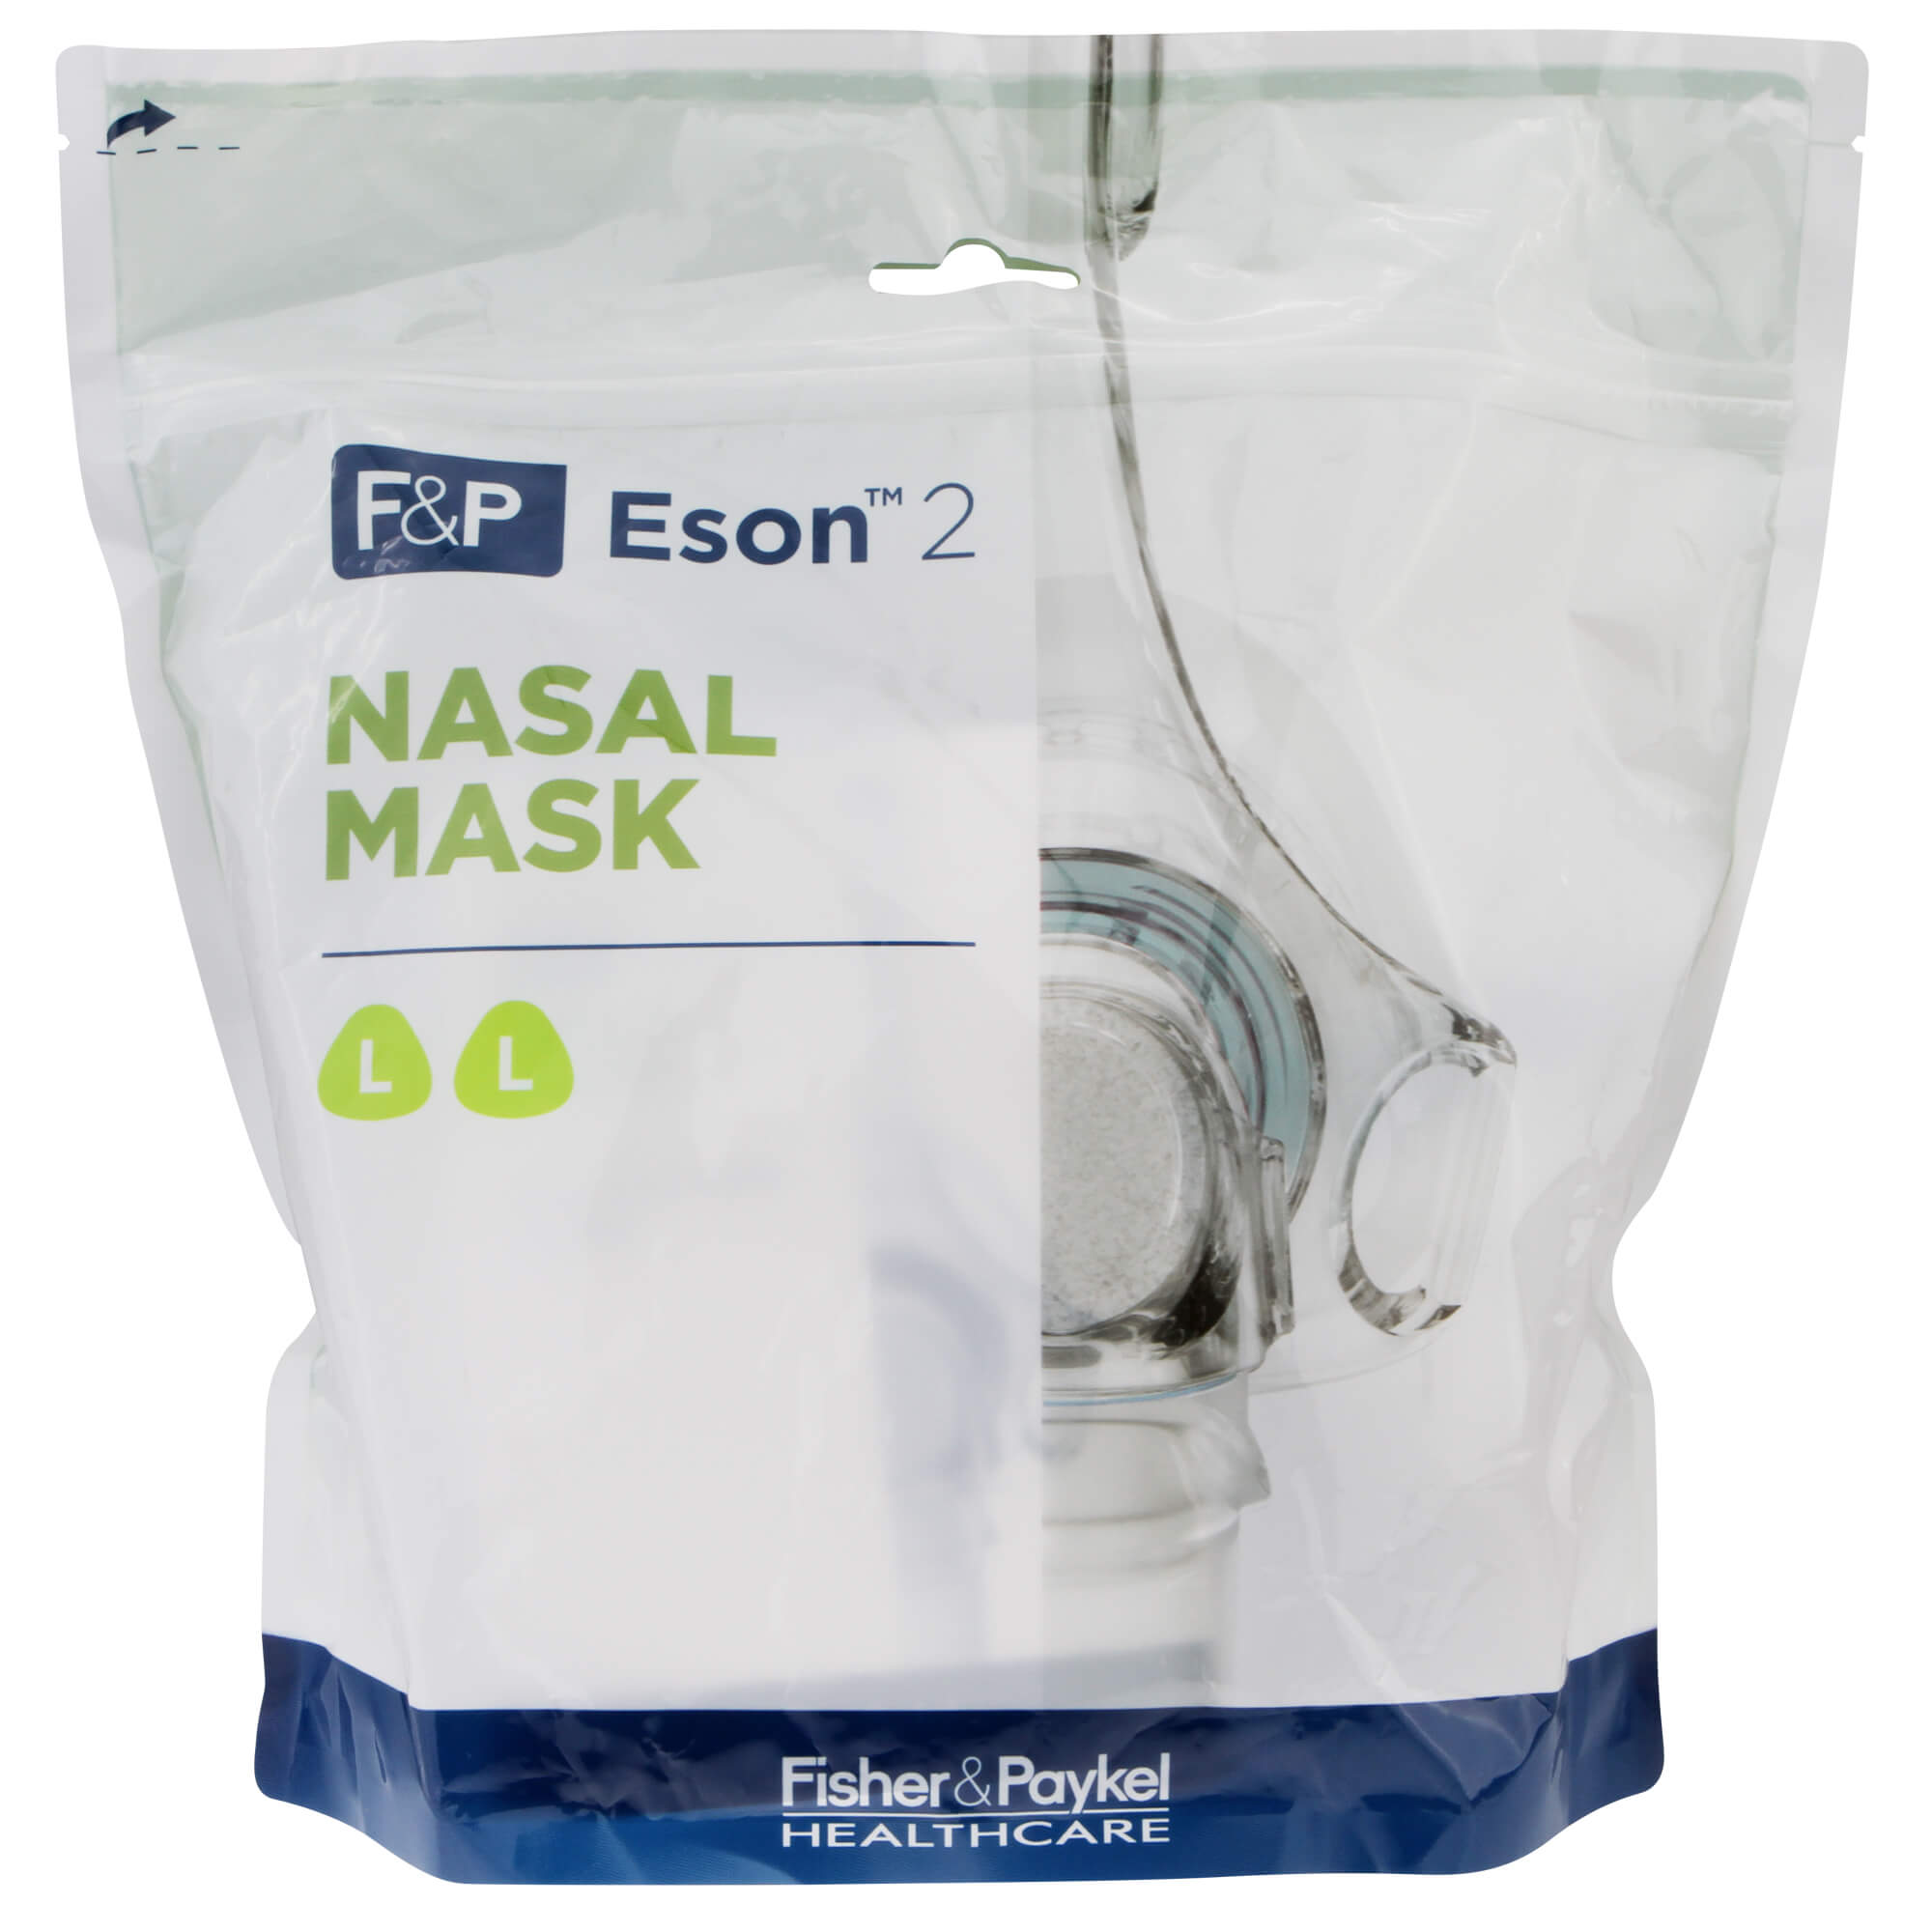 Fisher & Paykel ESON™ 2 Nasalmaske DuoPack mit 2 Maskenkissen